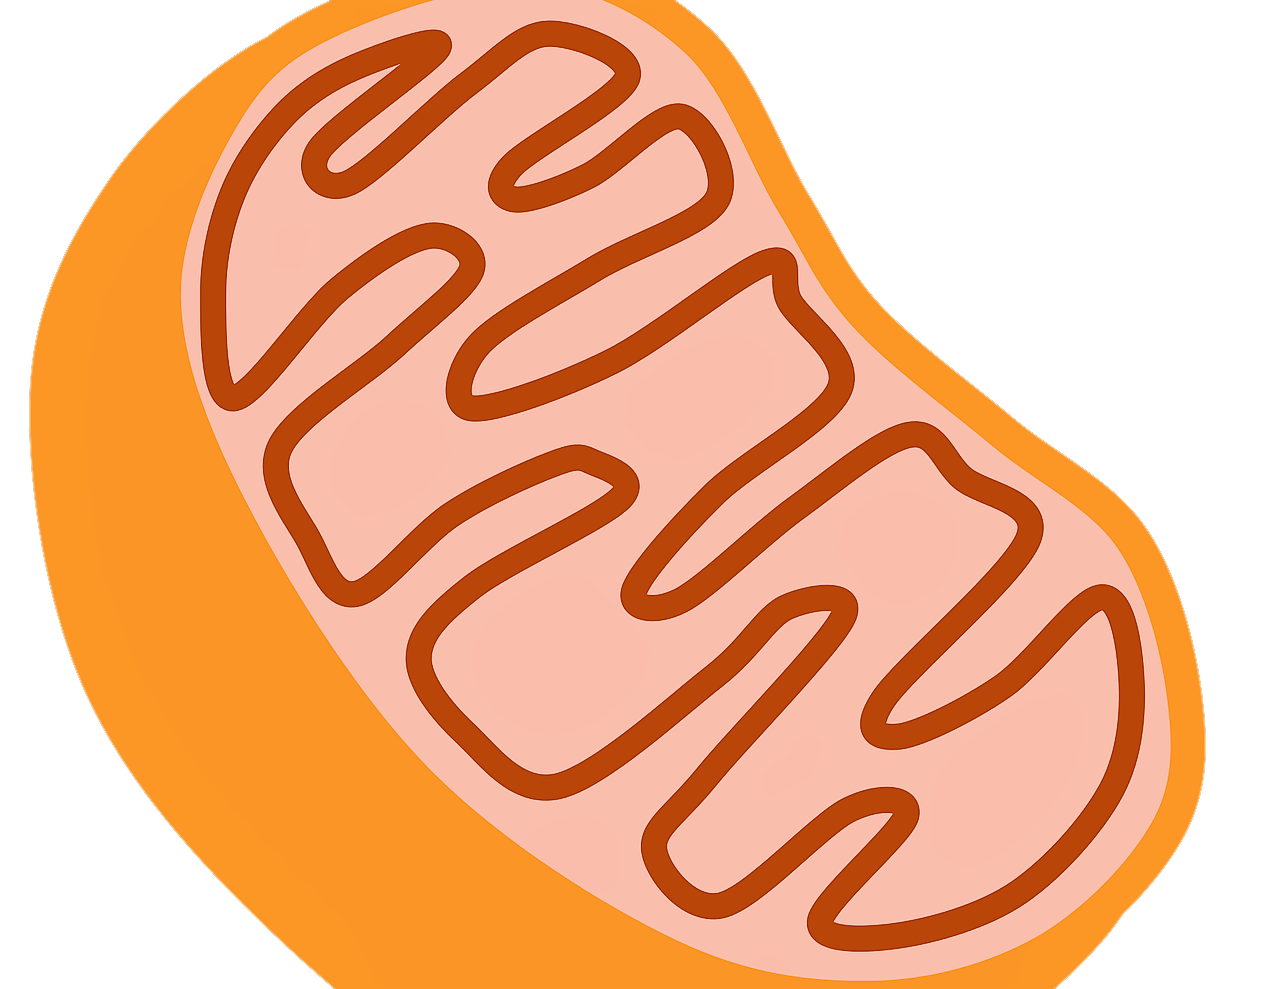 Mitocondria